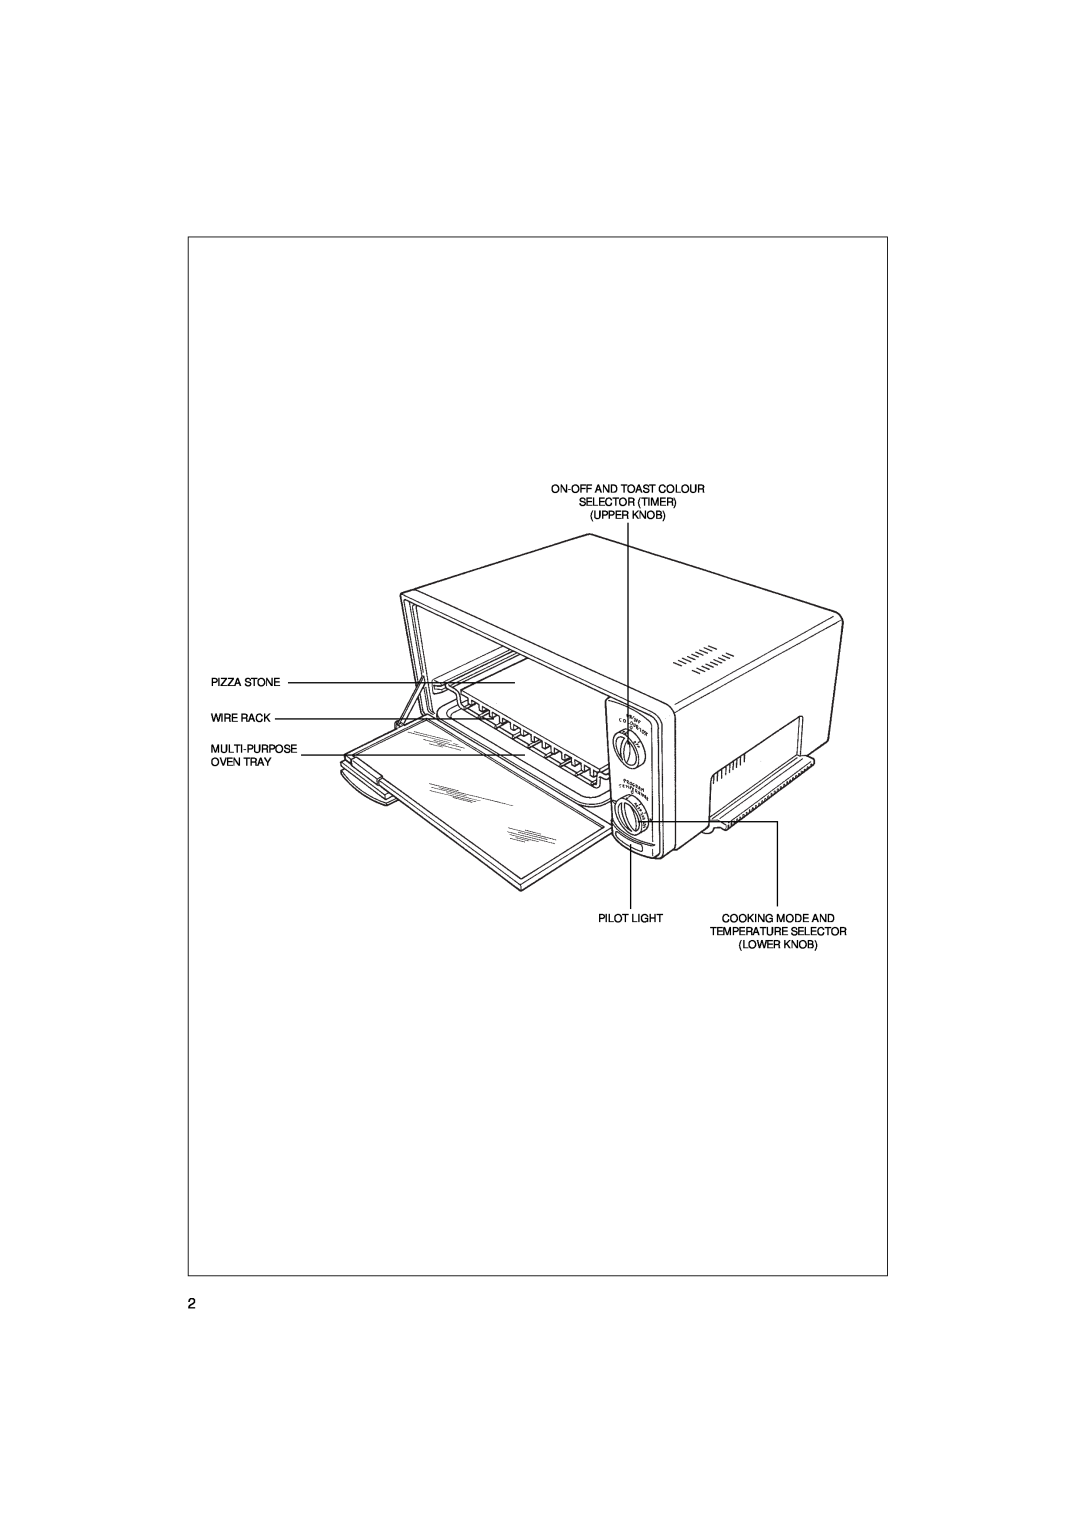 DeLonghi XU15C On-Offand Toast Colour Selector Timer Upper Knob, Pizza Stone Wire Rack Multi-Purpose Oven Tray, Lower Knob 